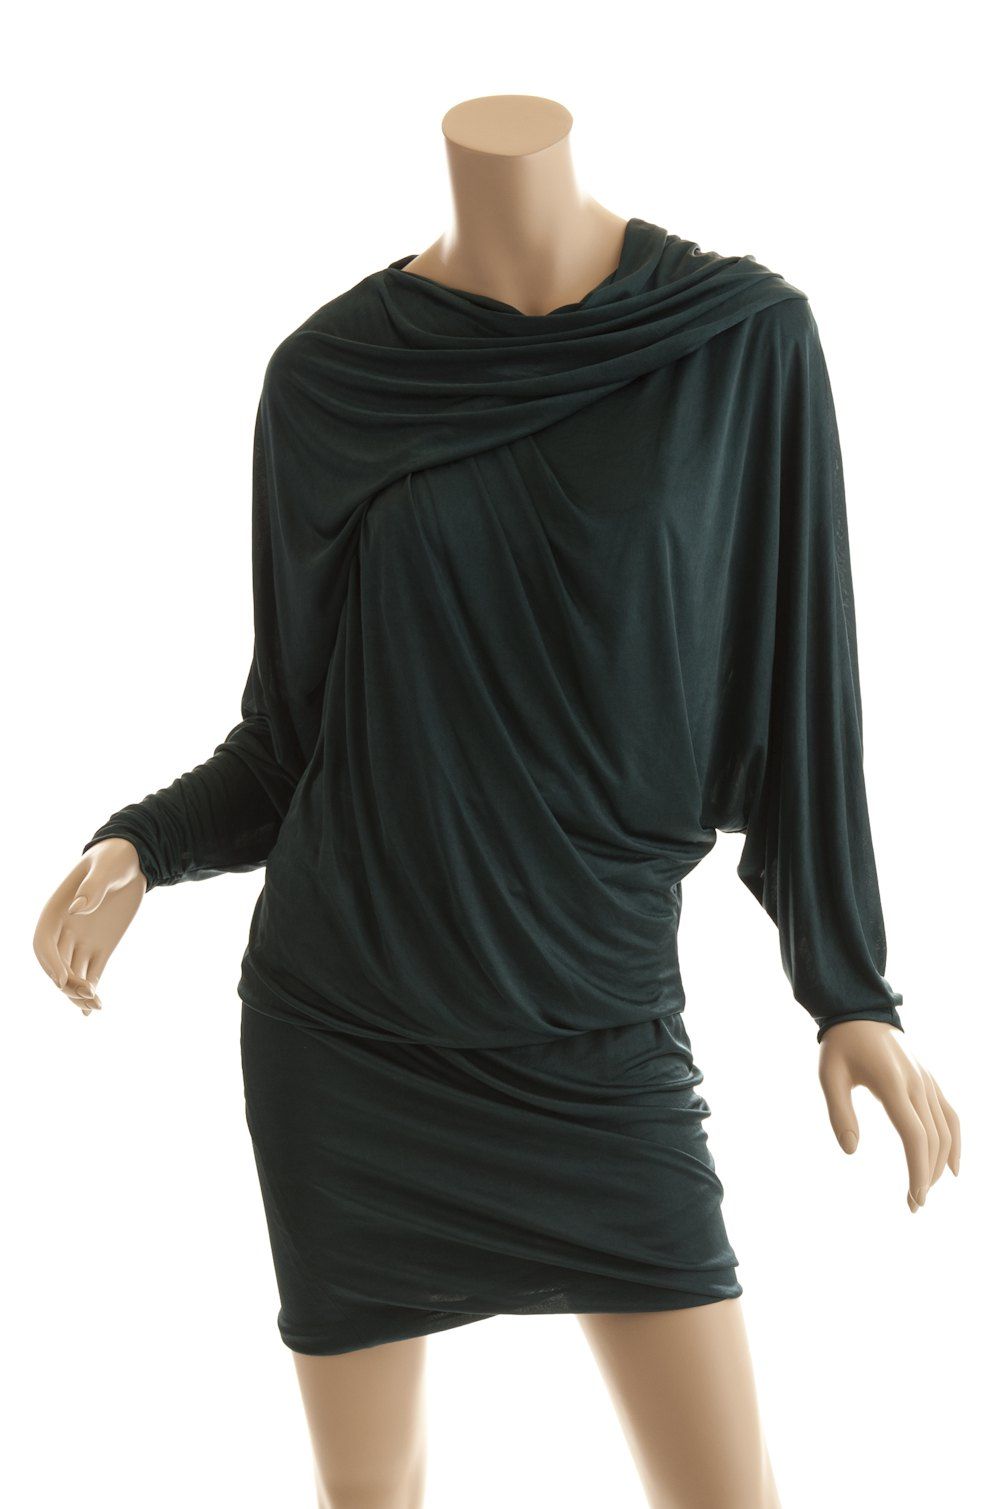 BCBG Max Azria Runway Collection Fern Green Draped Neckline Dress Size 